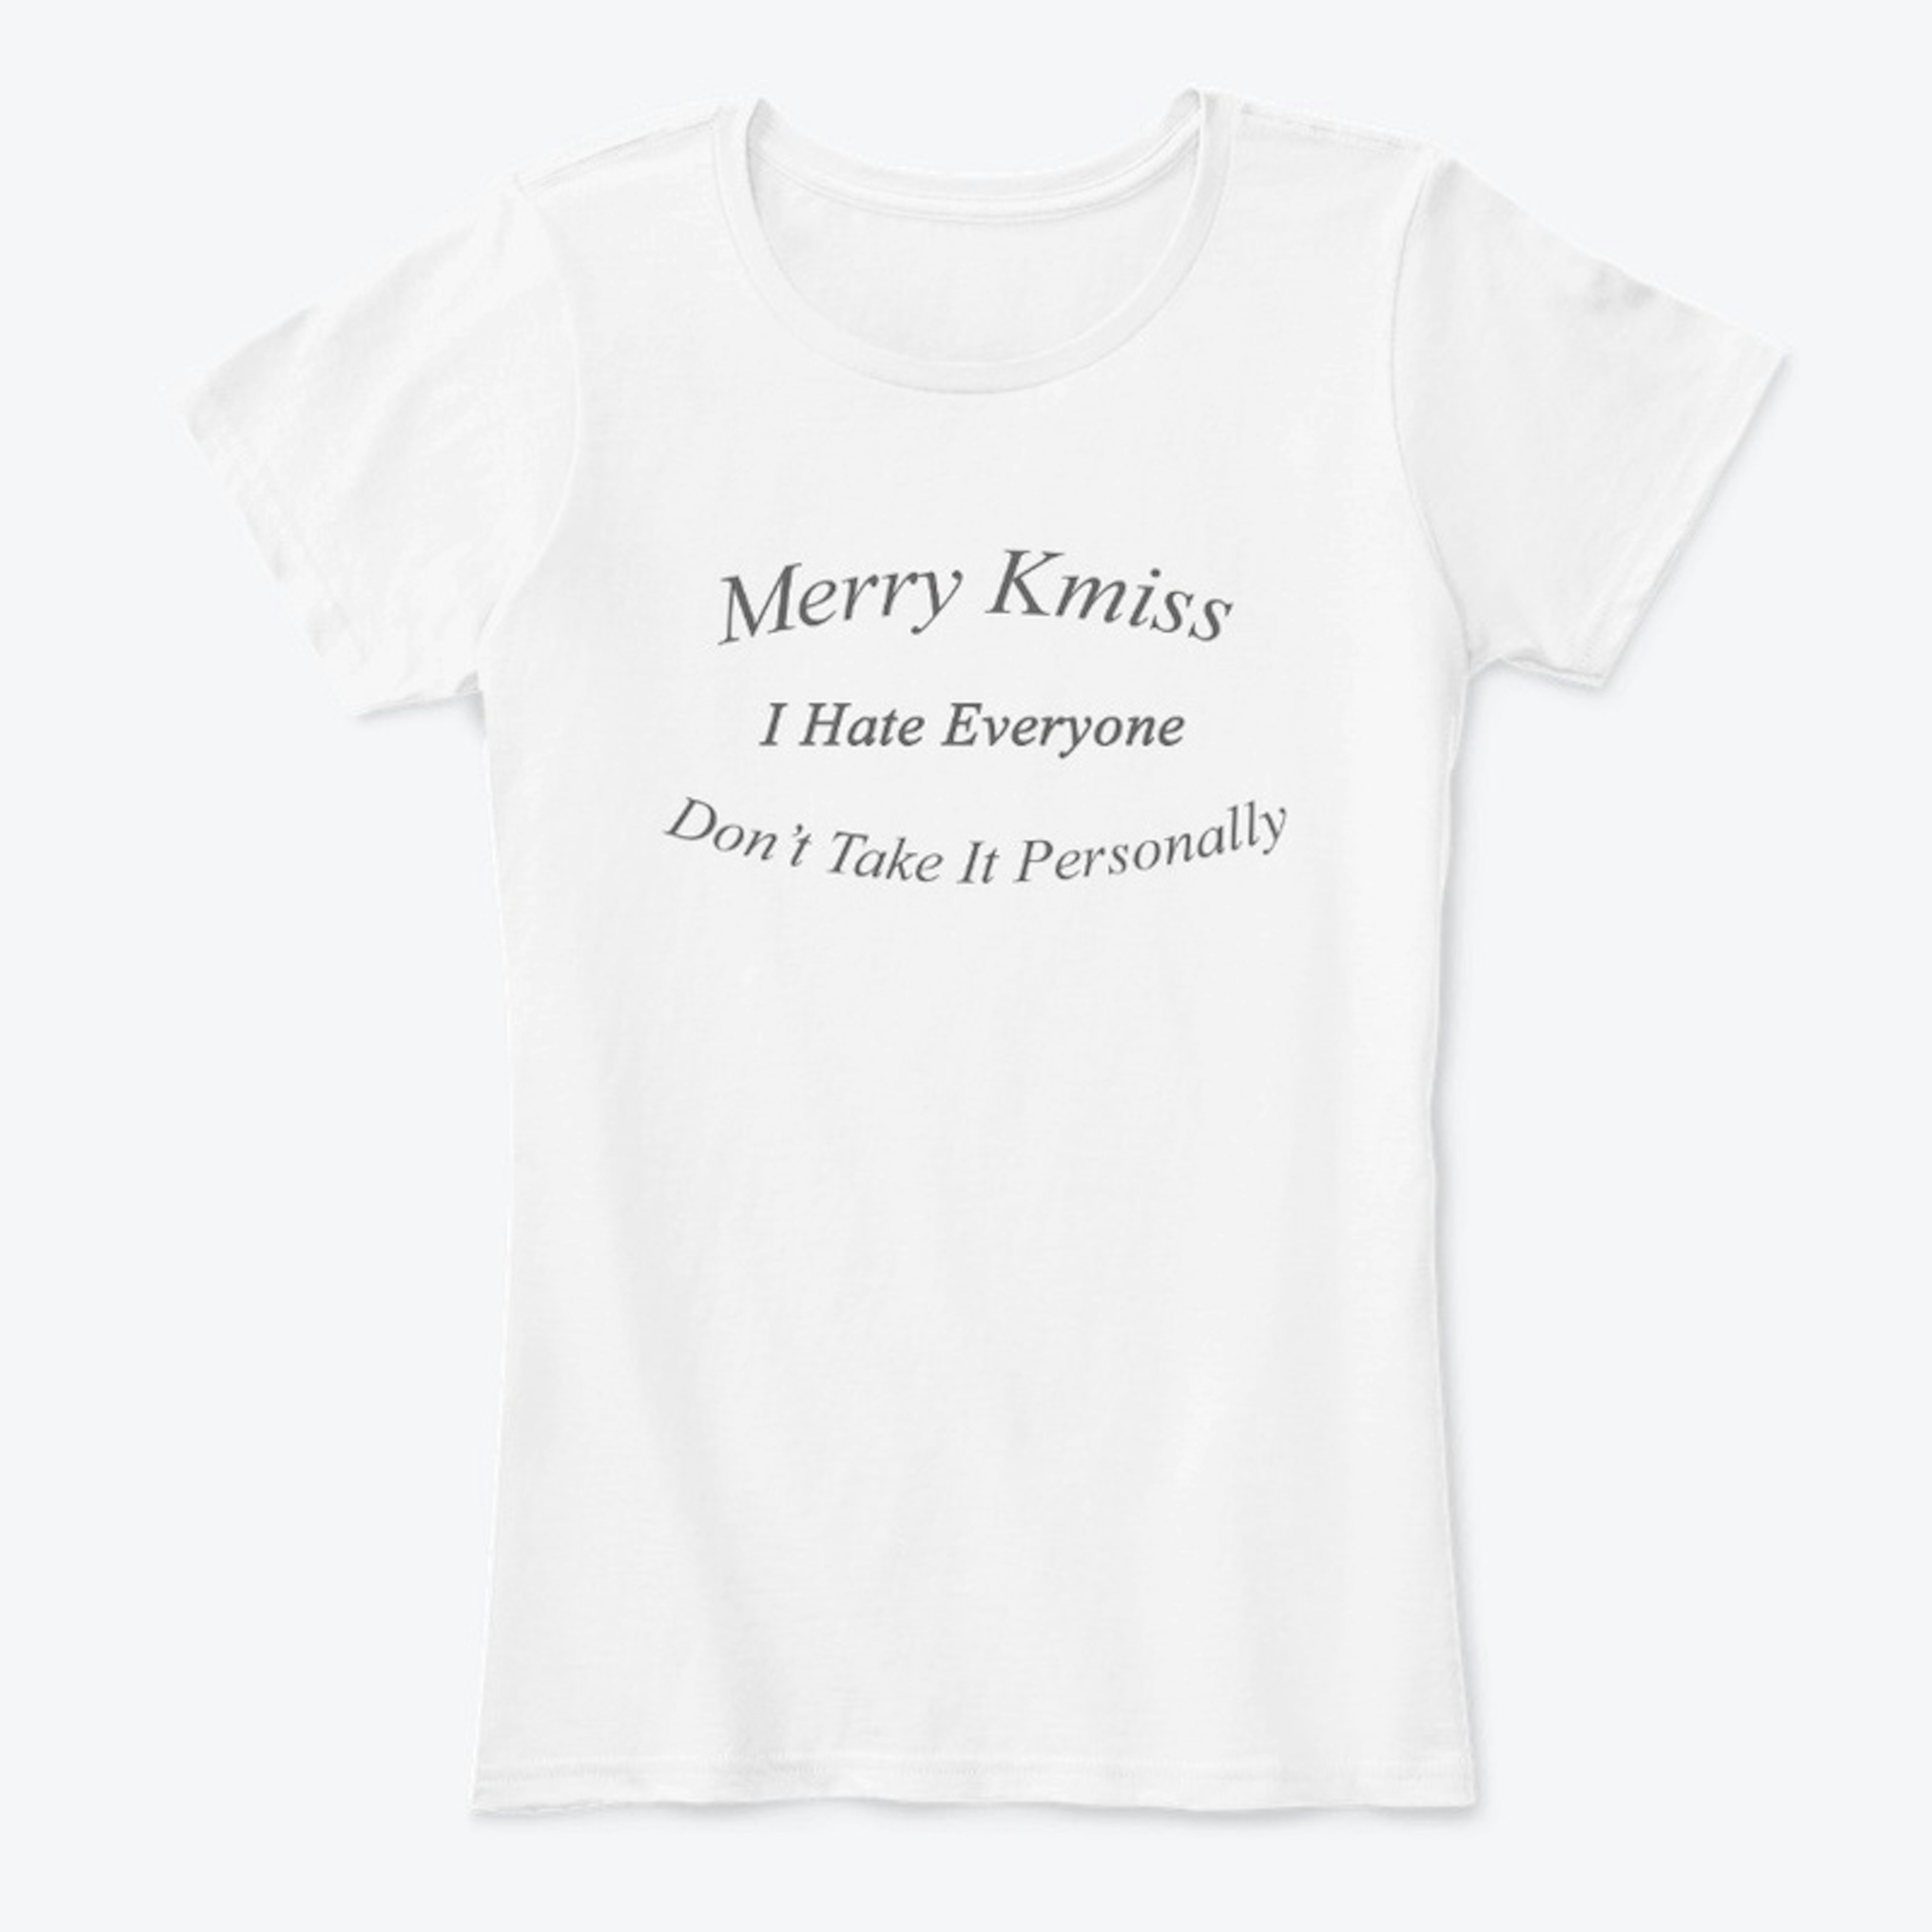 Merry Kmiss - I Hate Everyone